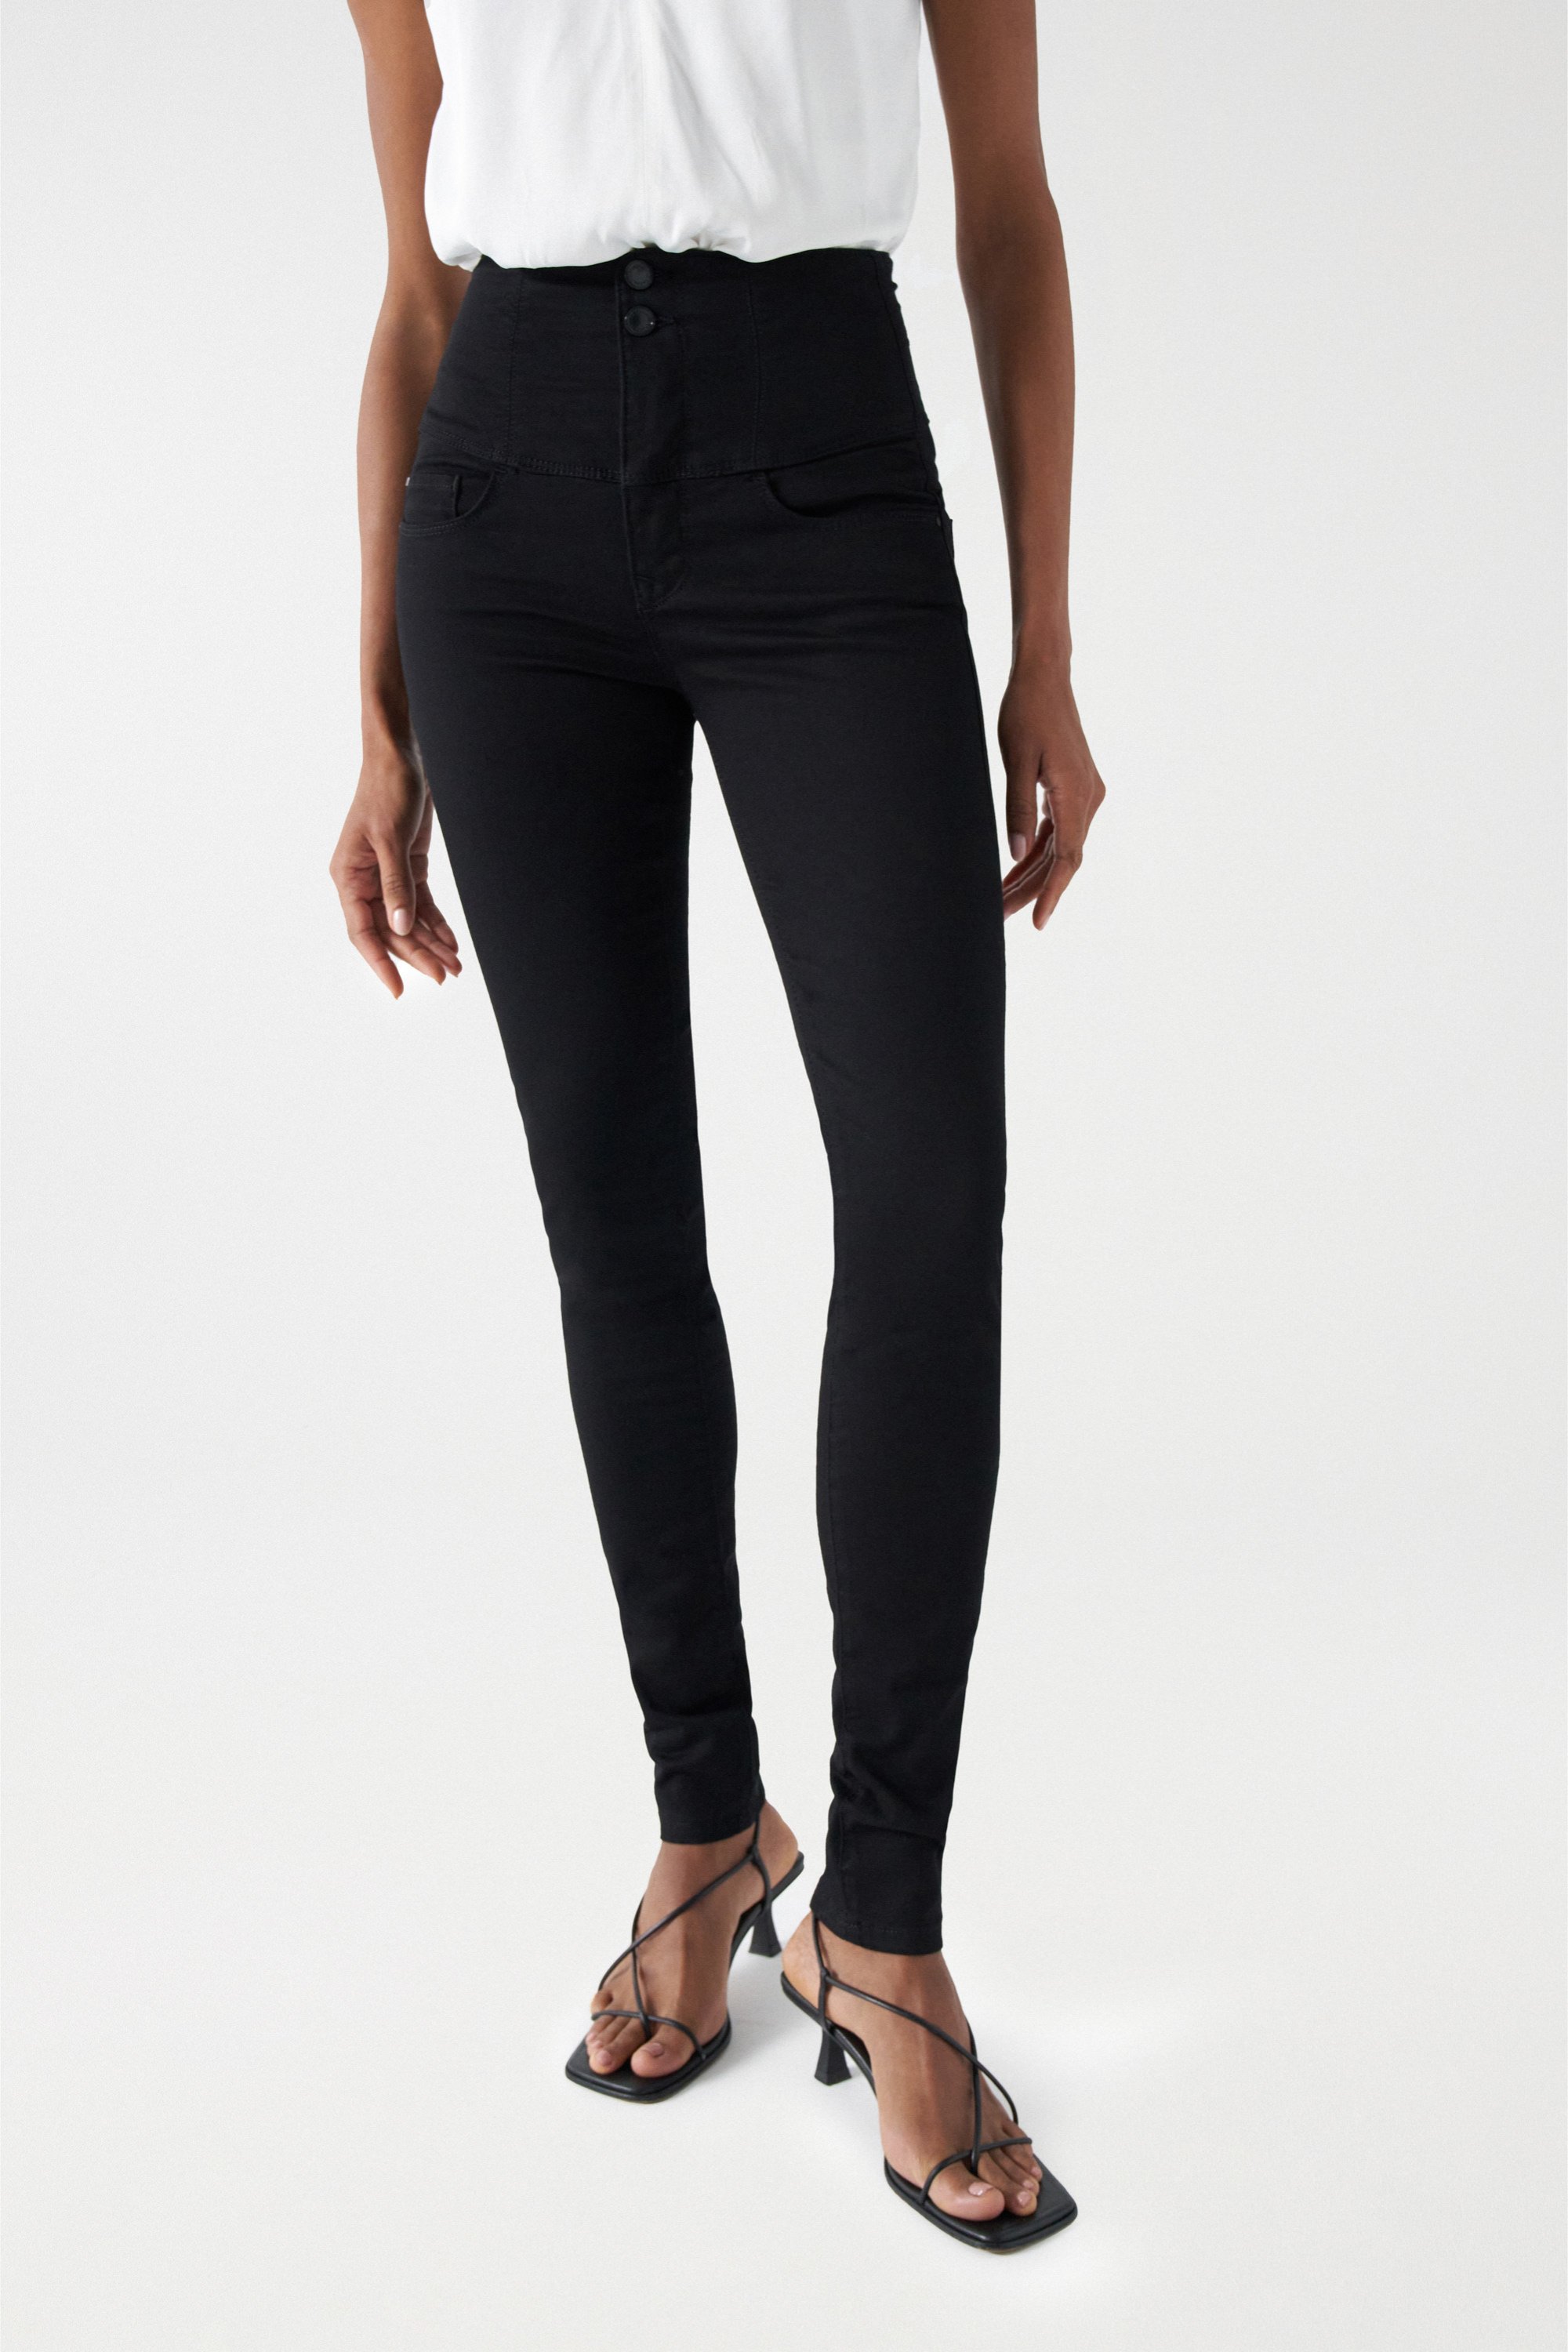 Diva slim fit slimming true black jeans | Jeans Salsa Jeans